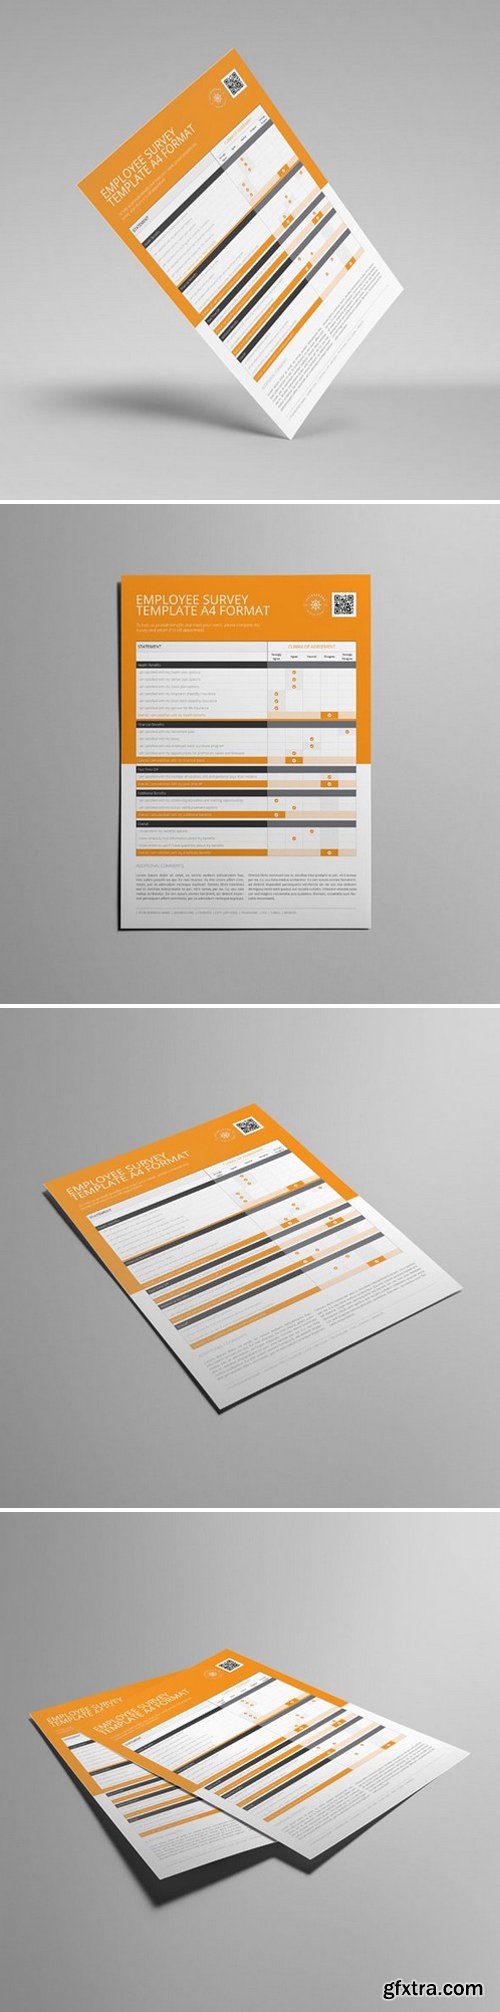 KeBoto - Employee Survey Template A4 Format 000129